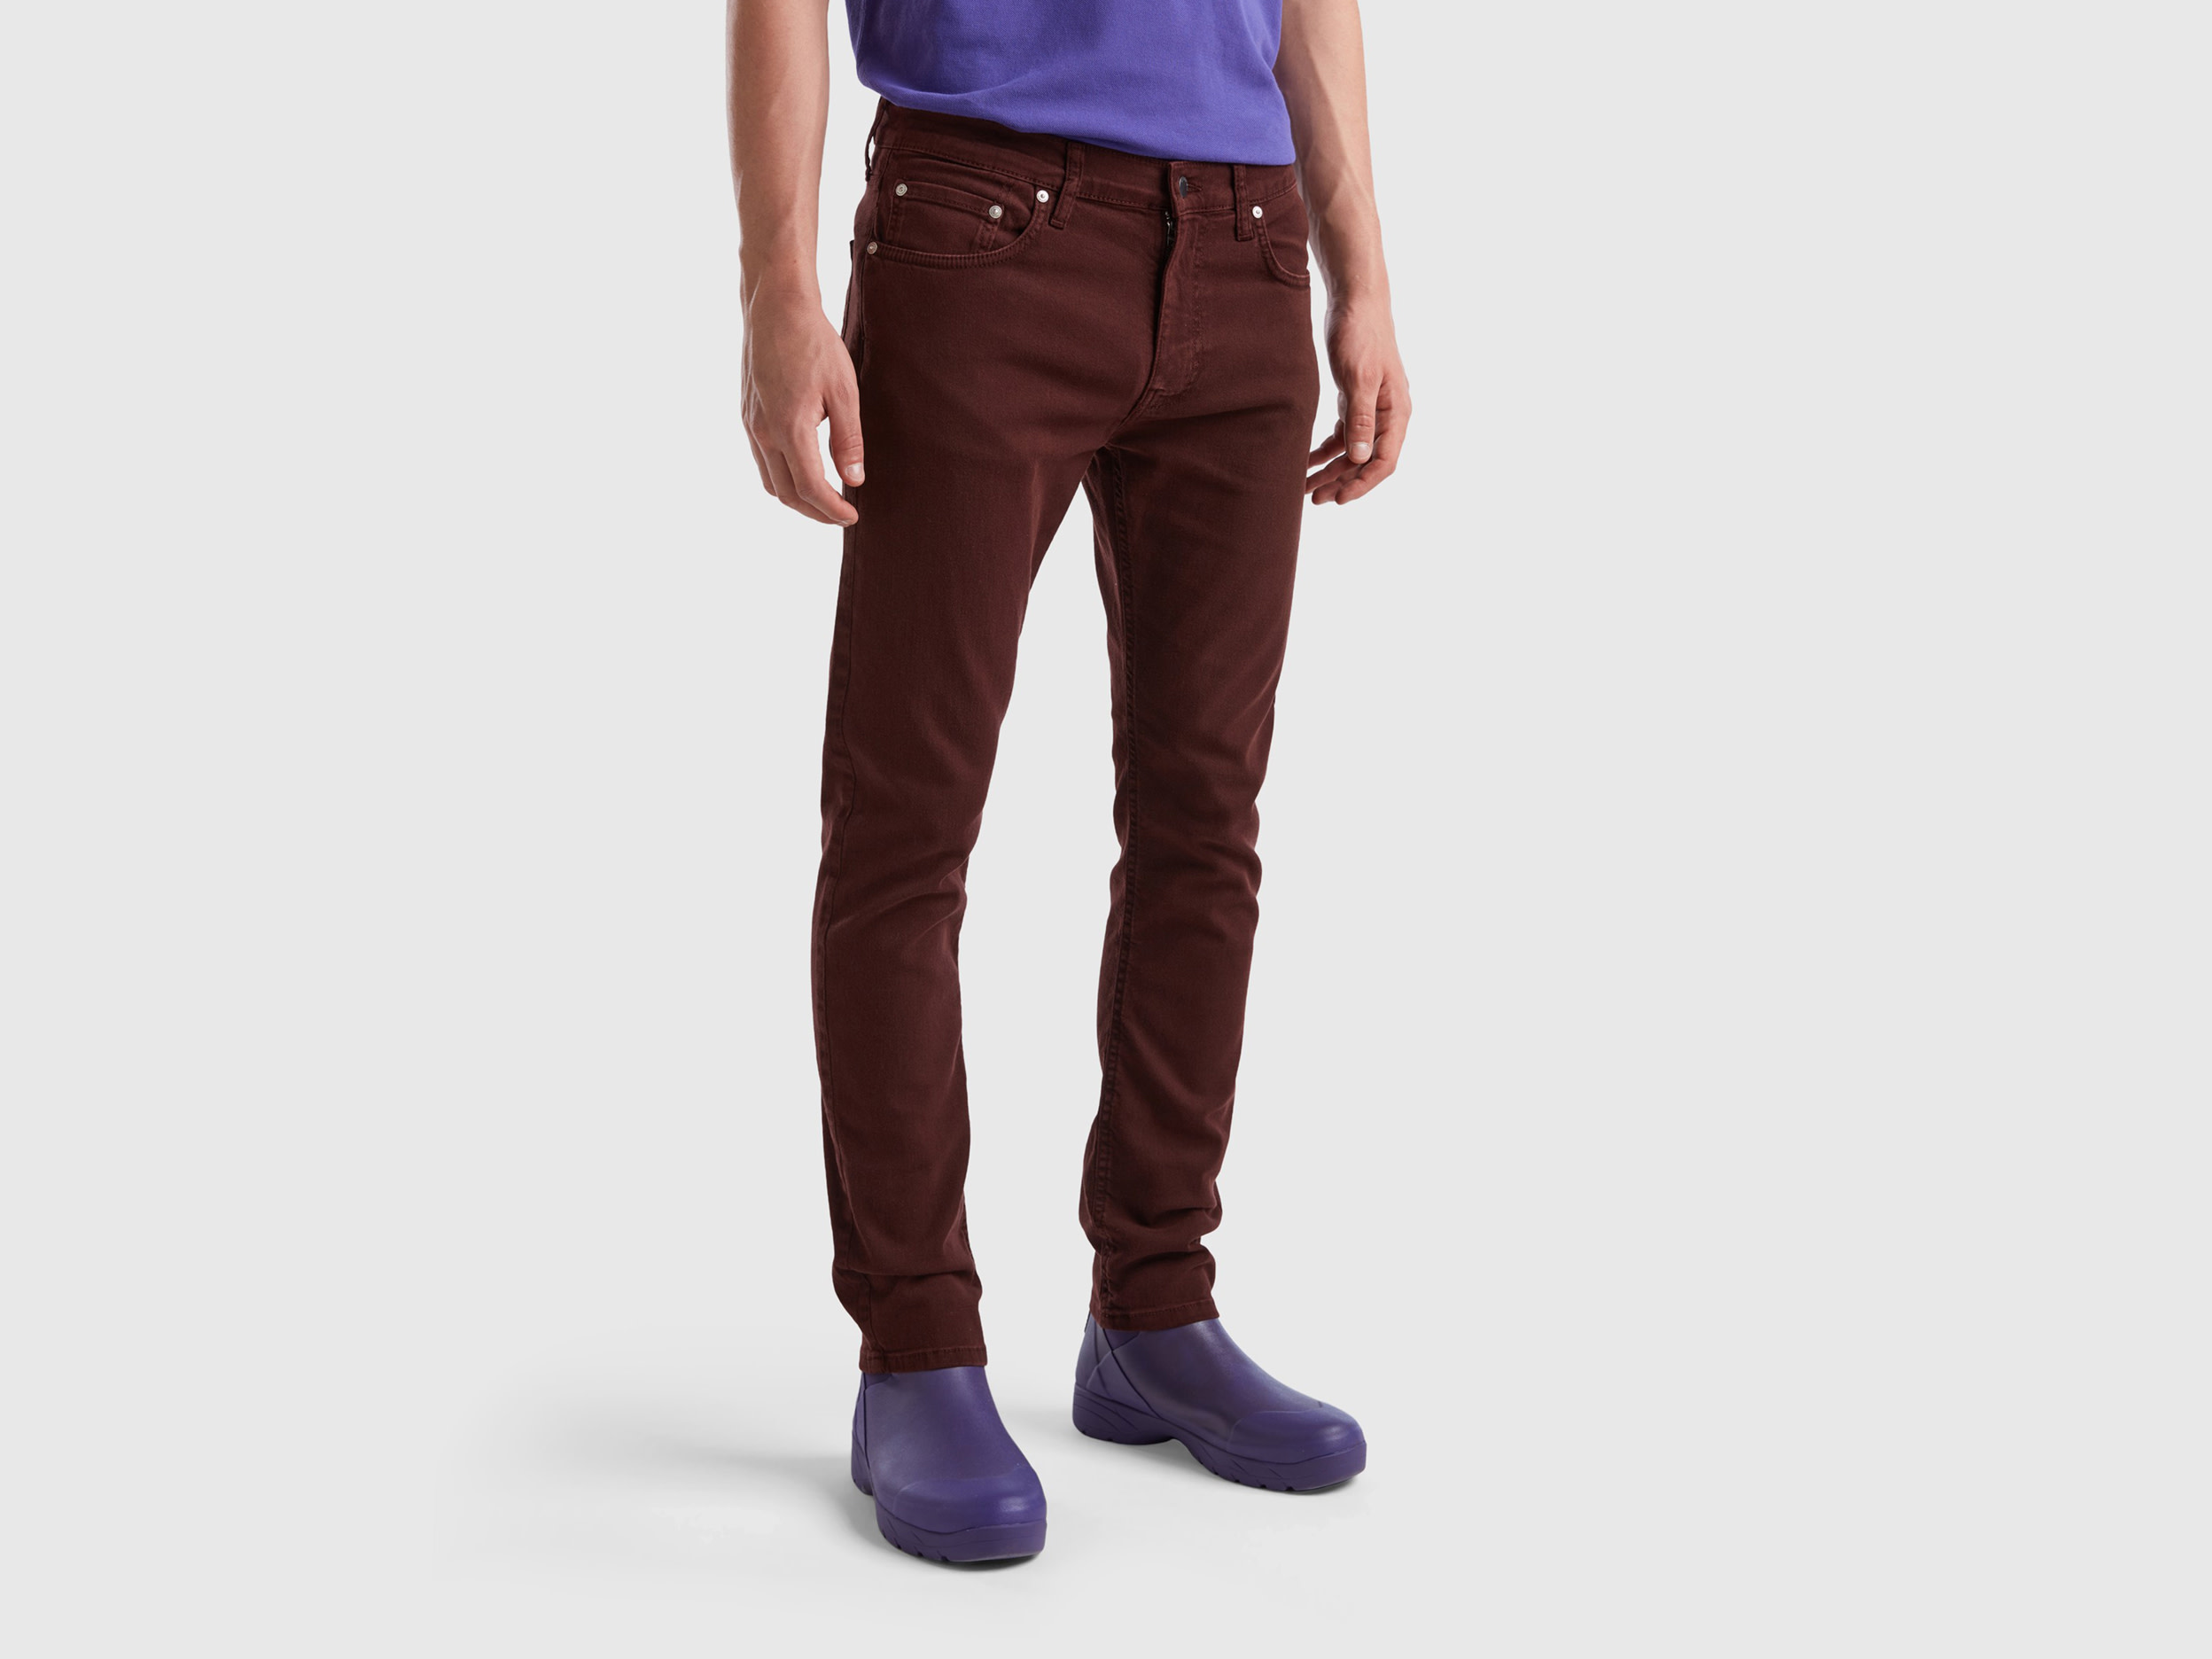 Benetton, Five Pocket Slim Fit Trousers, size 29, Dark Brown, Men